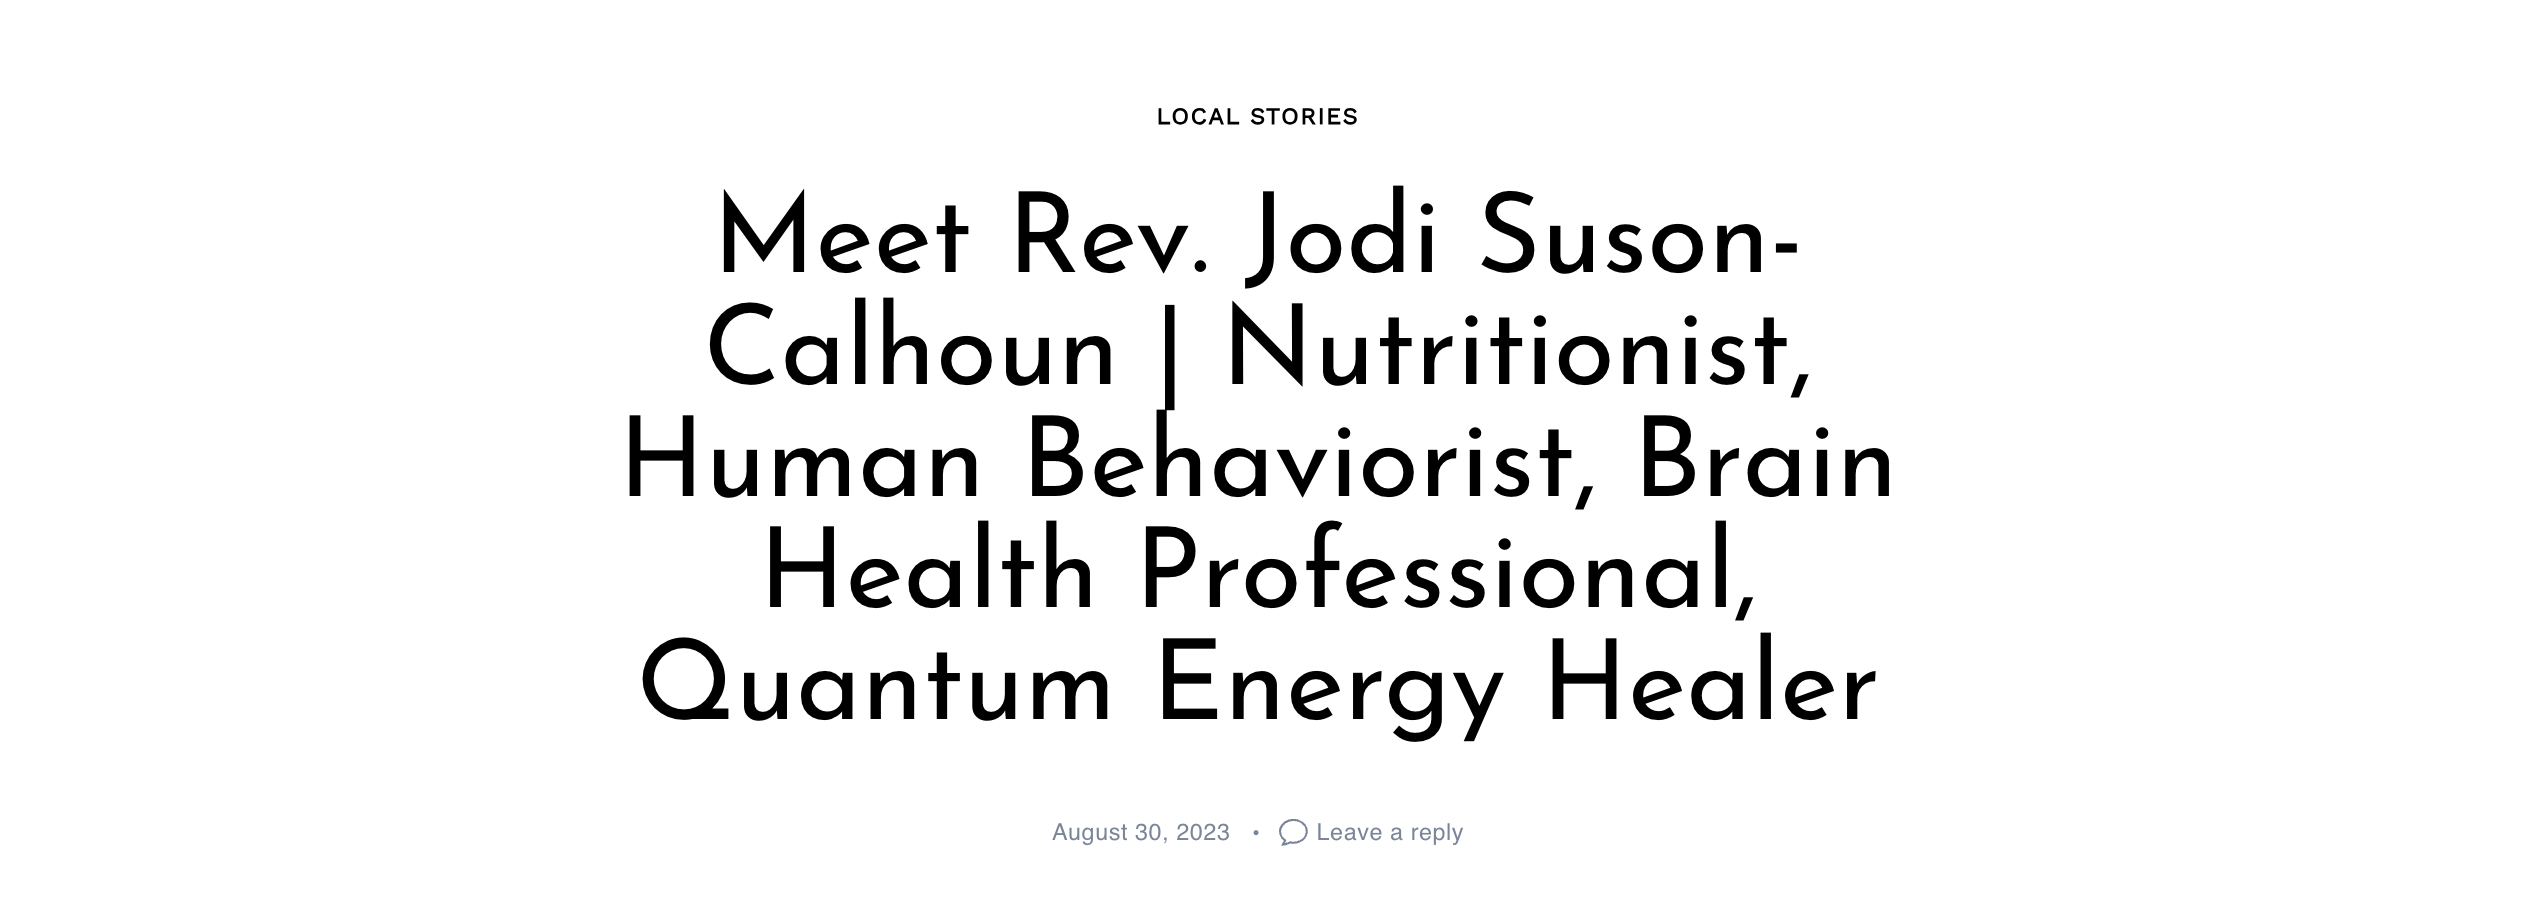 Meet Rev. Jodi Suson-Calhoun | Nutritionist, Human Behaviorist, Brain Health Professional, Quantum Energy Healer